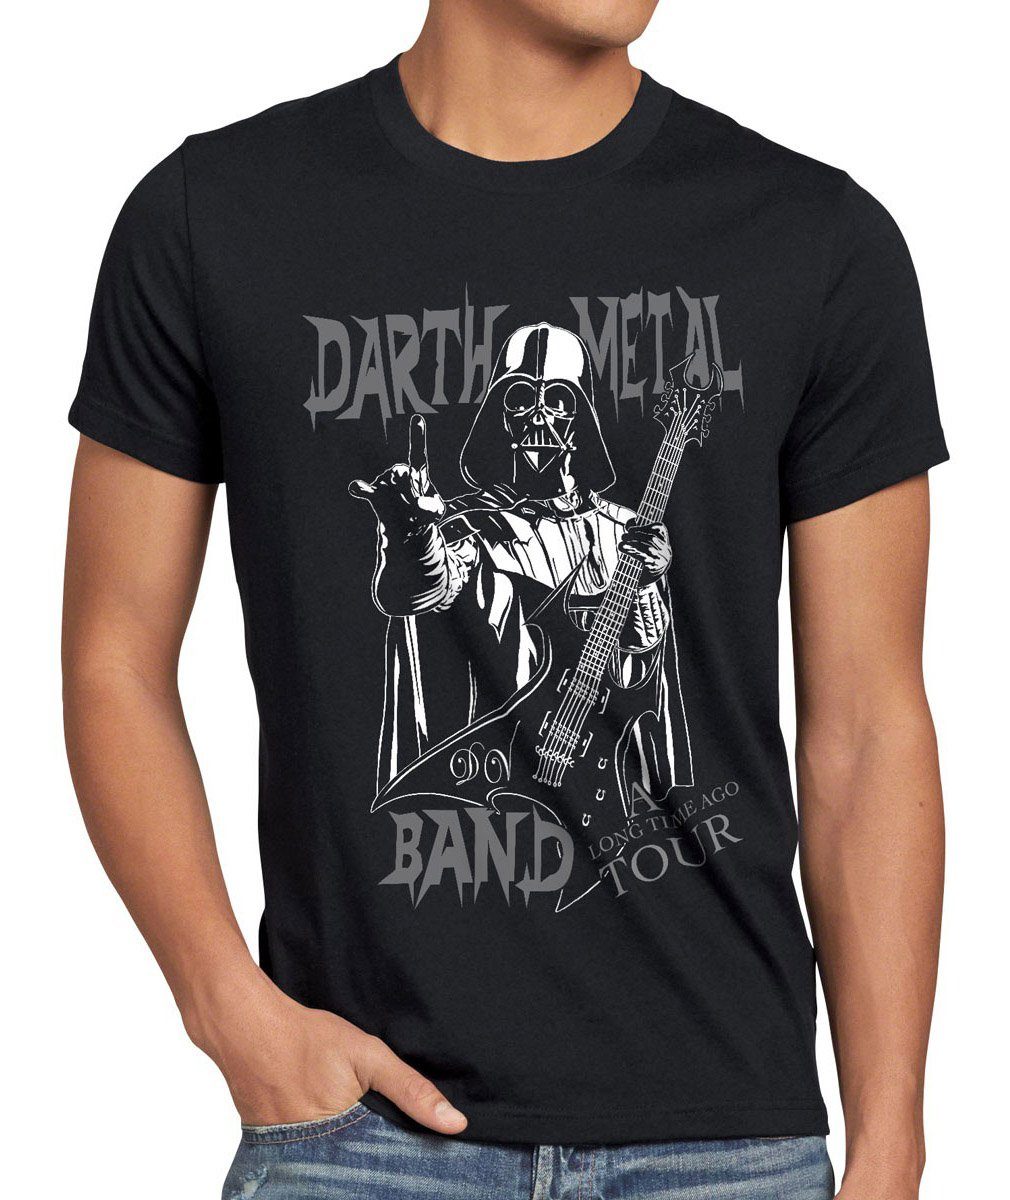 style3 Print-Shirt Herren T-Shirt Darth Metal Band star vader luke wars jedi yoda skywalker rock us schwarz